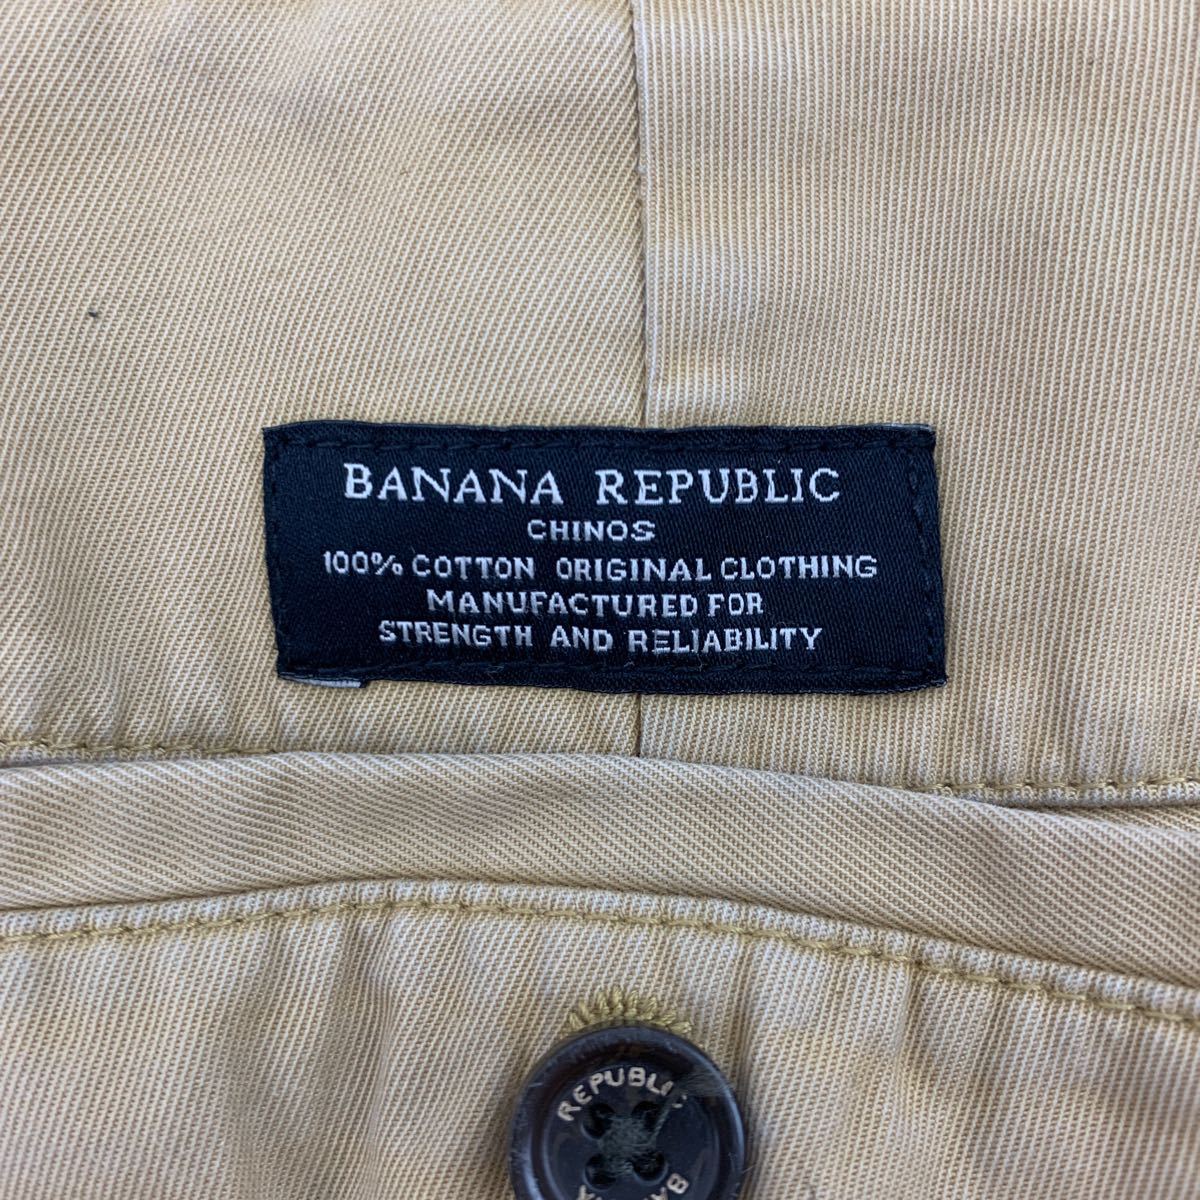  Banana Republic * beautiful tight Silhouette * slim cotton pants chino pants beige W31 adult casual BANANA REPUBLIC#vv